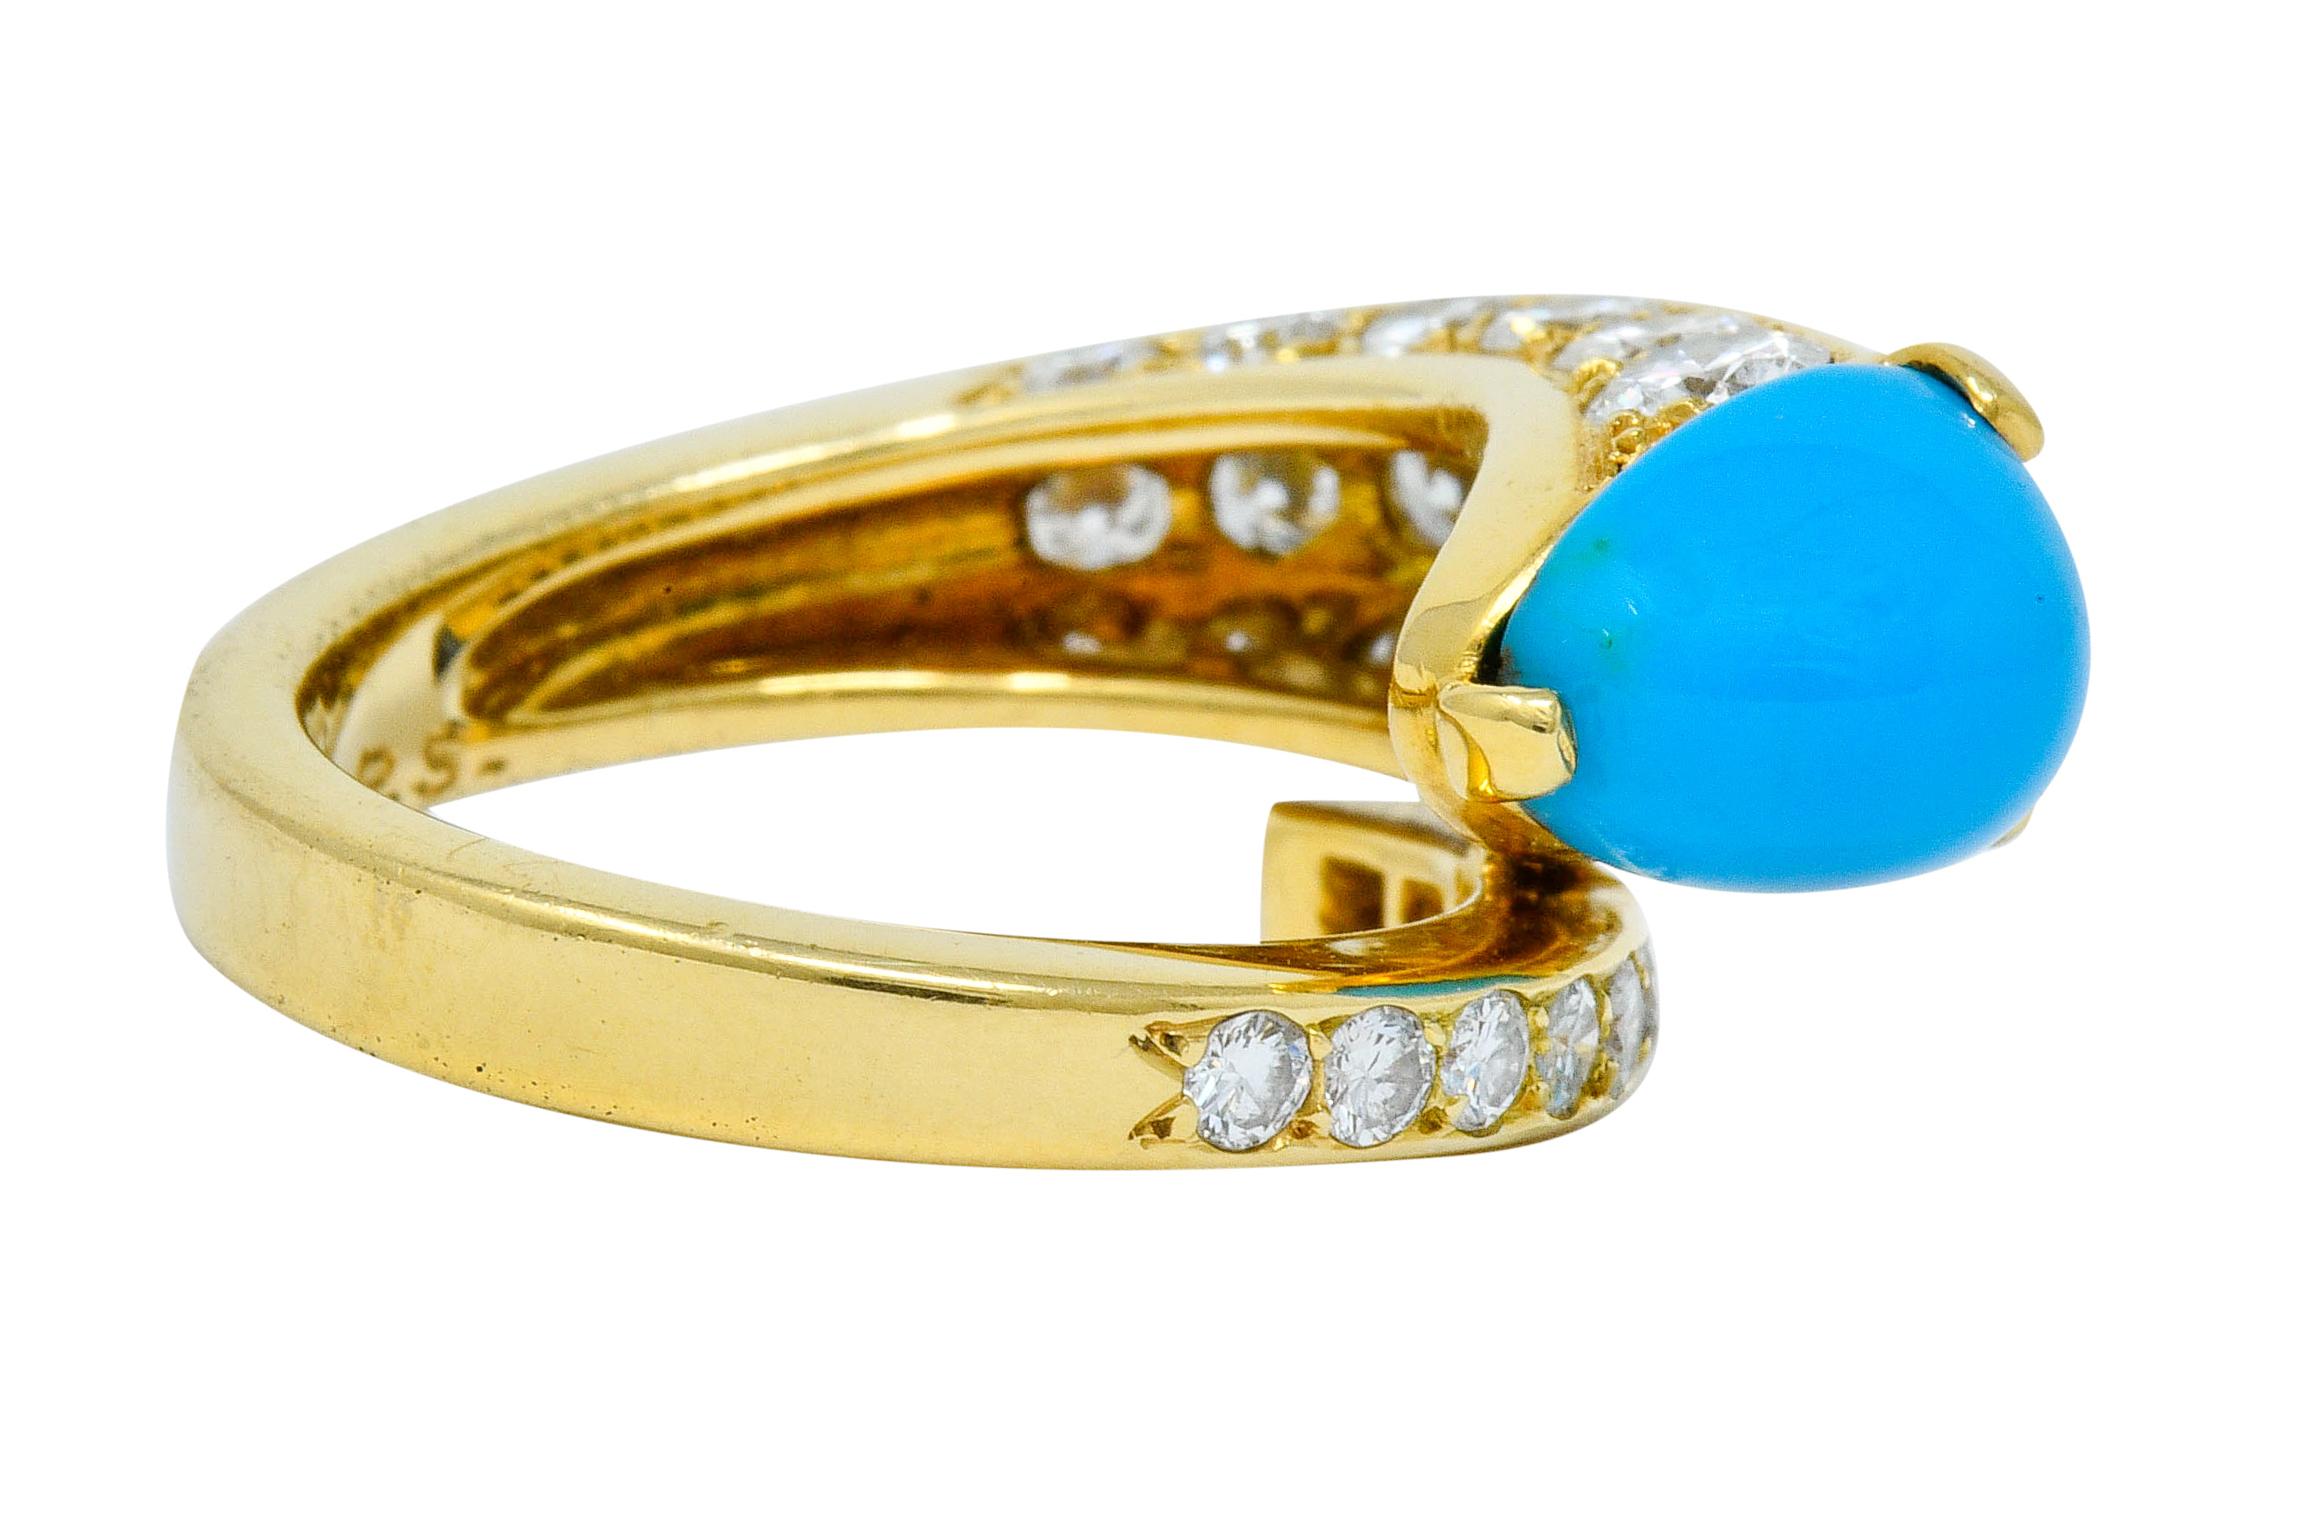 Contemporary 1970s Cartier Paris Diamond Turquoise 18 Karat Gold Bypass Ring, circa 1970s